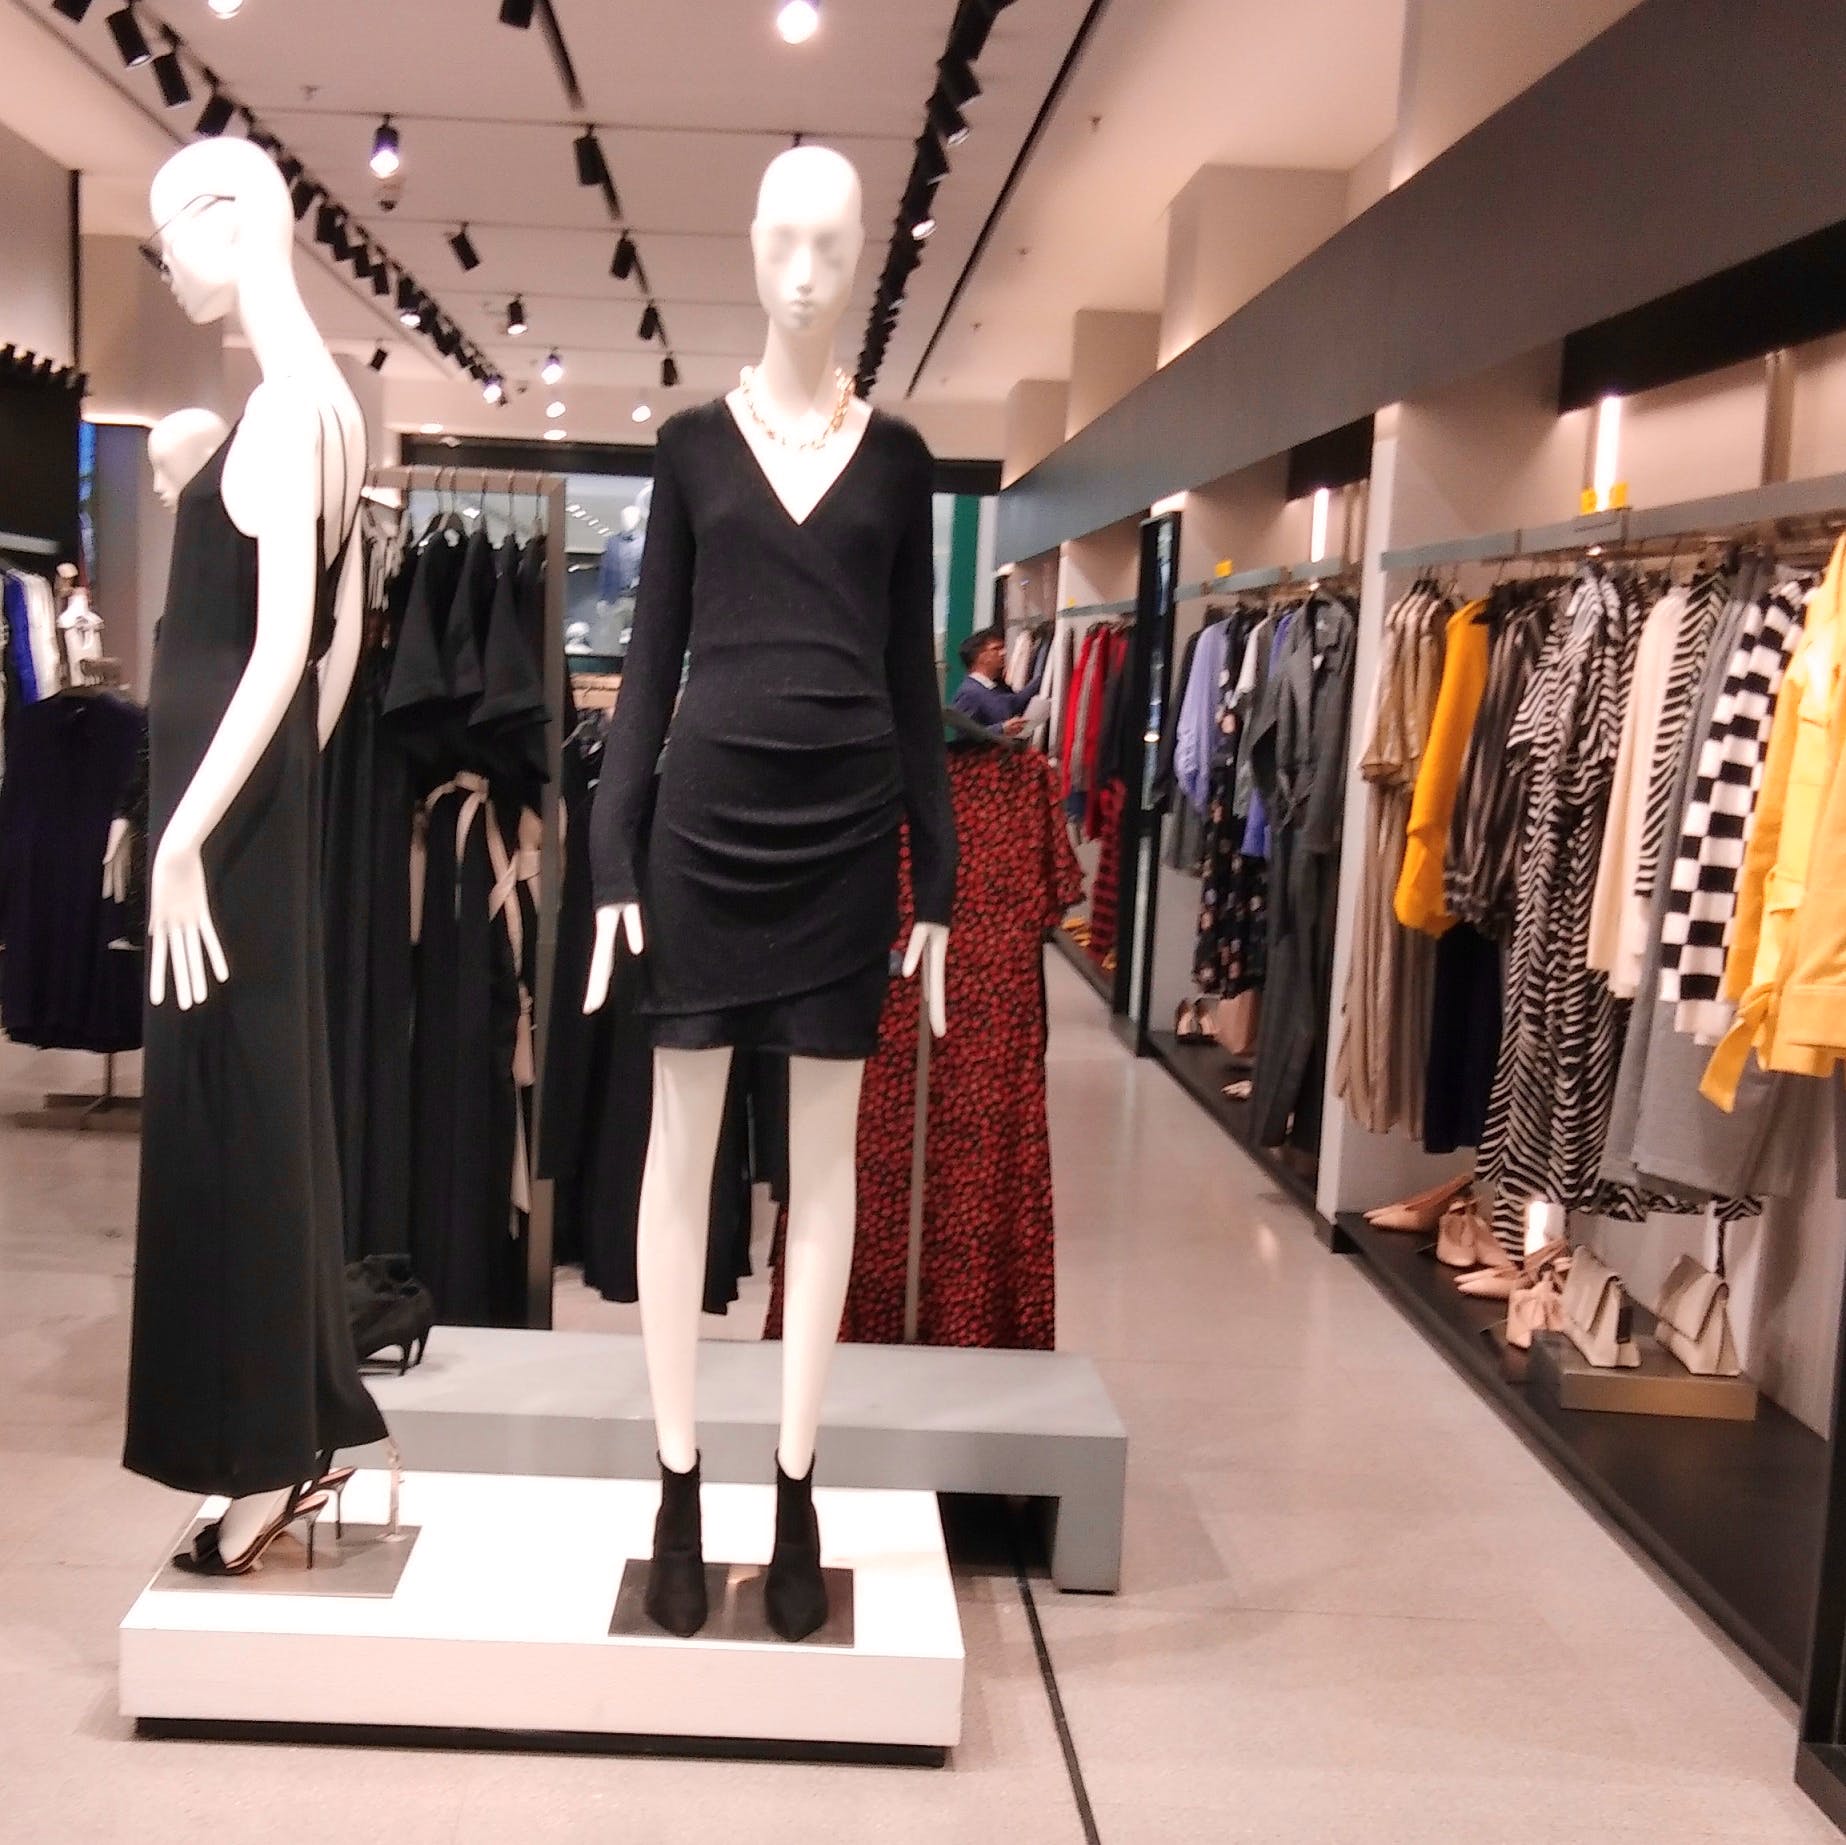 Boutique,Clothing,Fashion,Retail,Outlet store,Mannequin,Fashion design,Dress,Design,Black-and-white